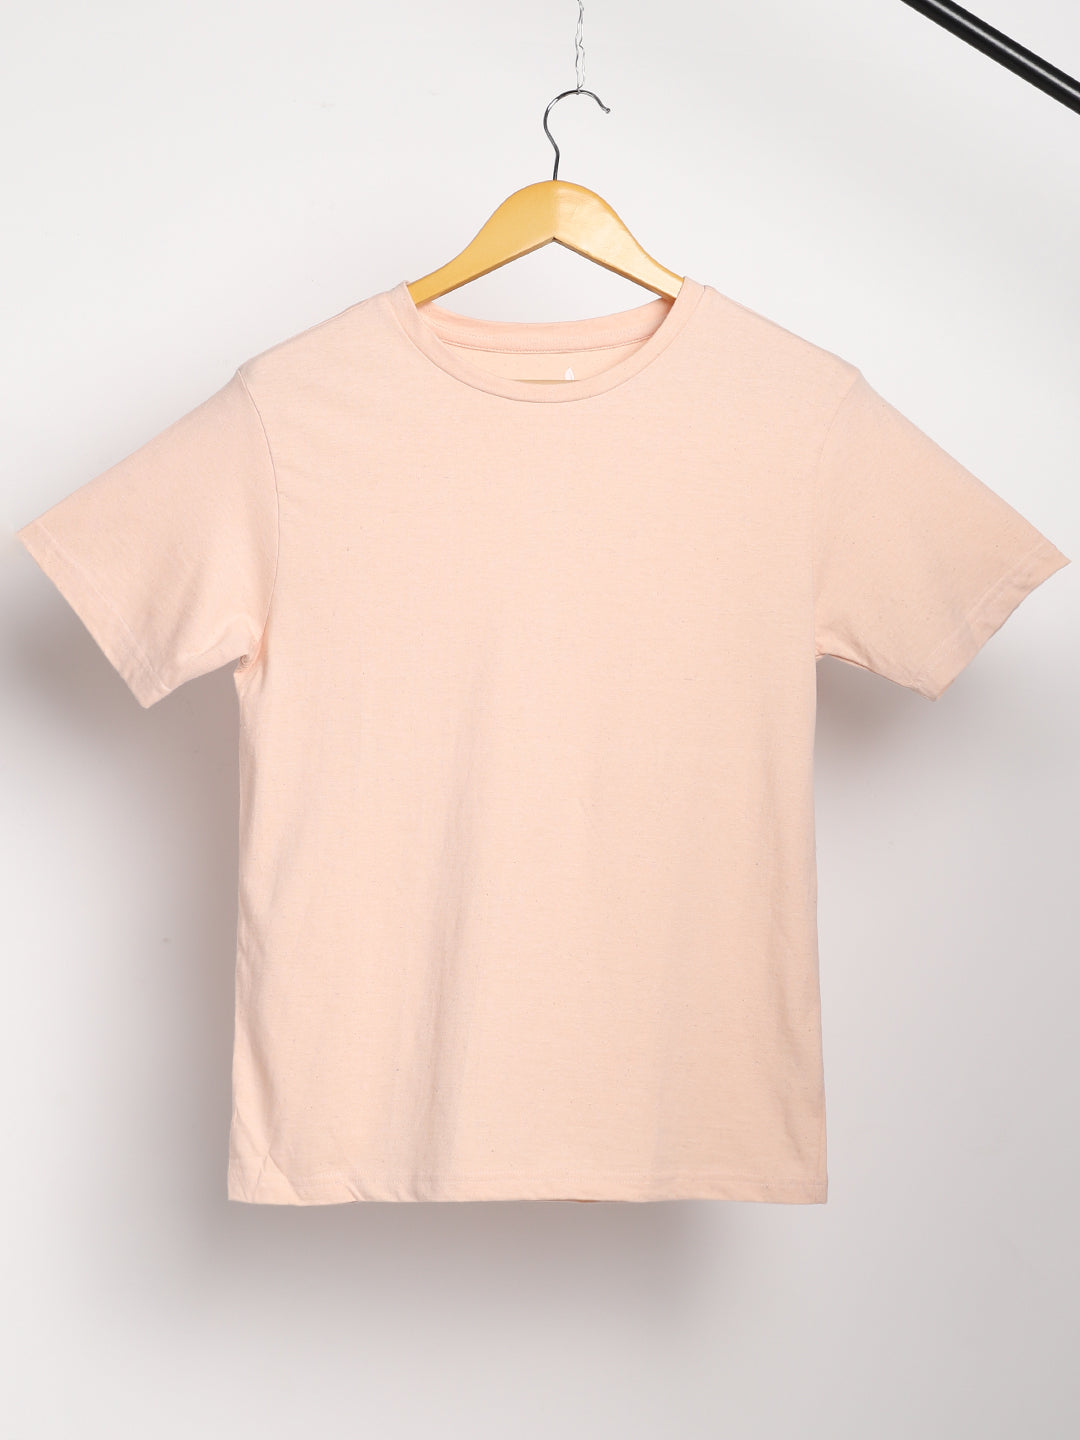 Baby Pink Organic Cotton & Naturally Fiber Dyed T-shirt